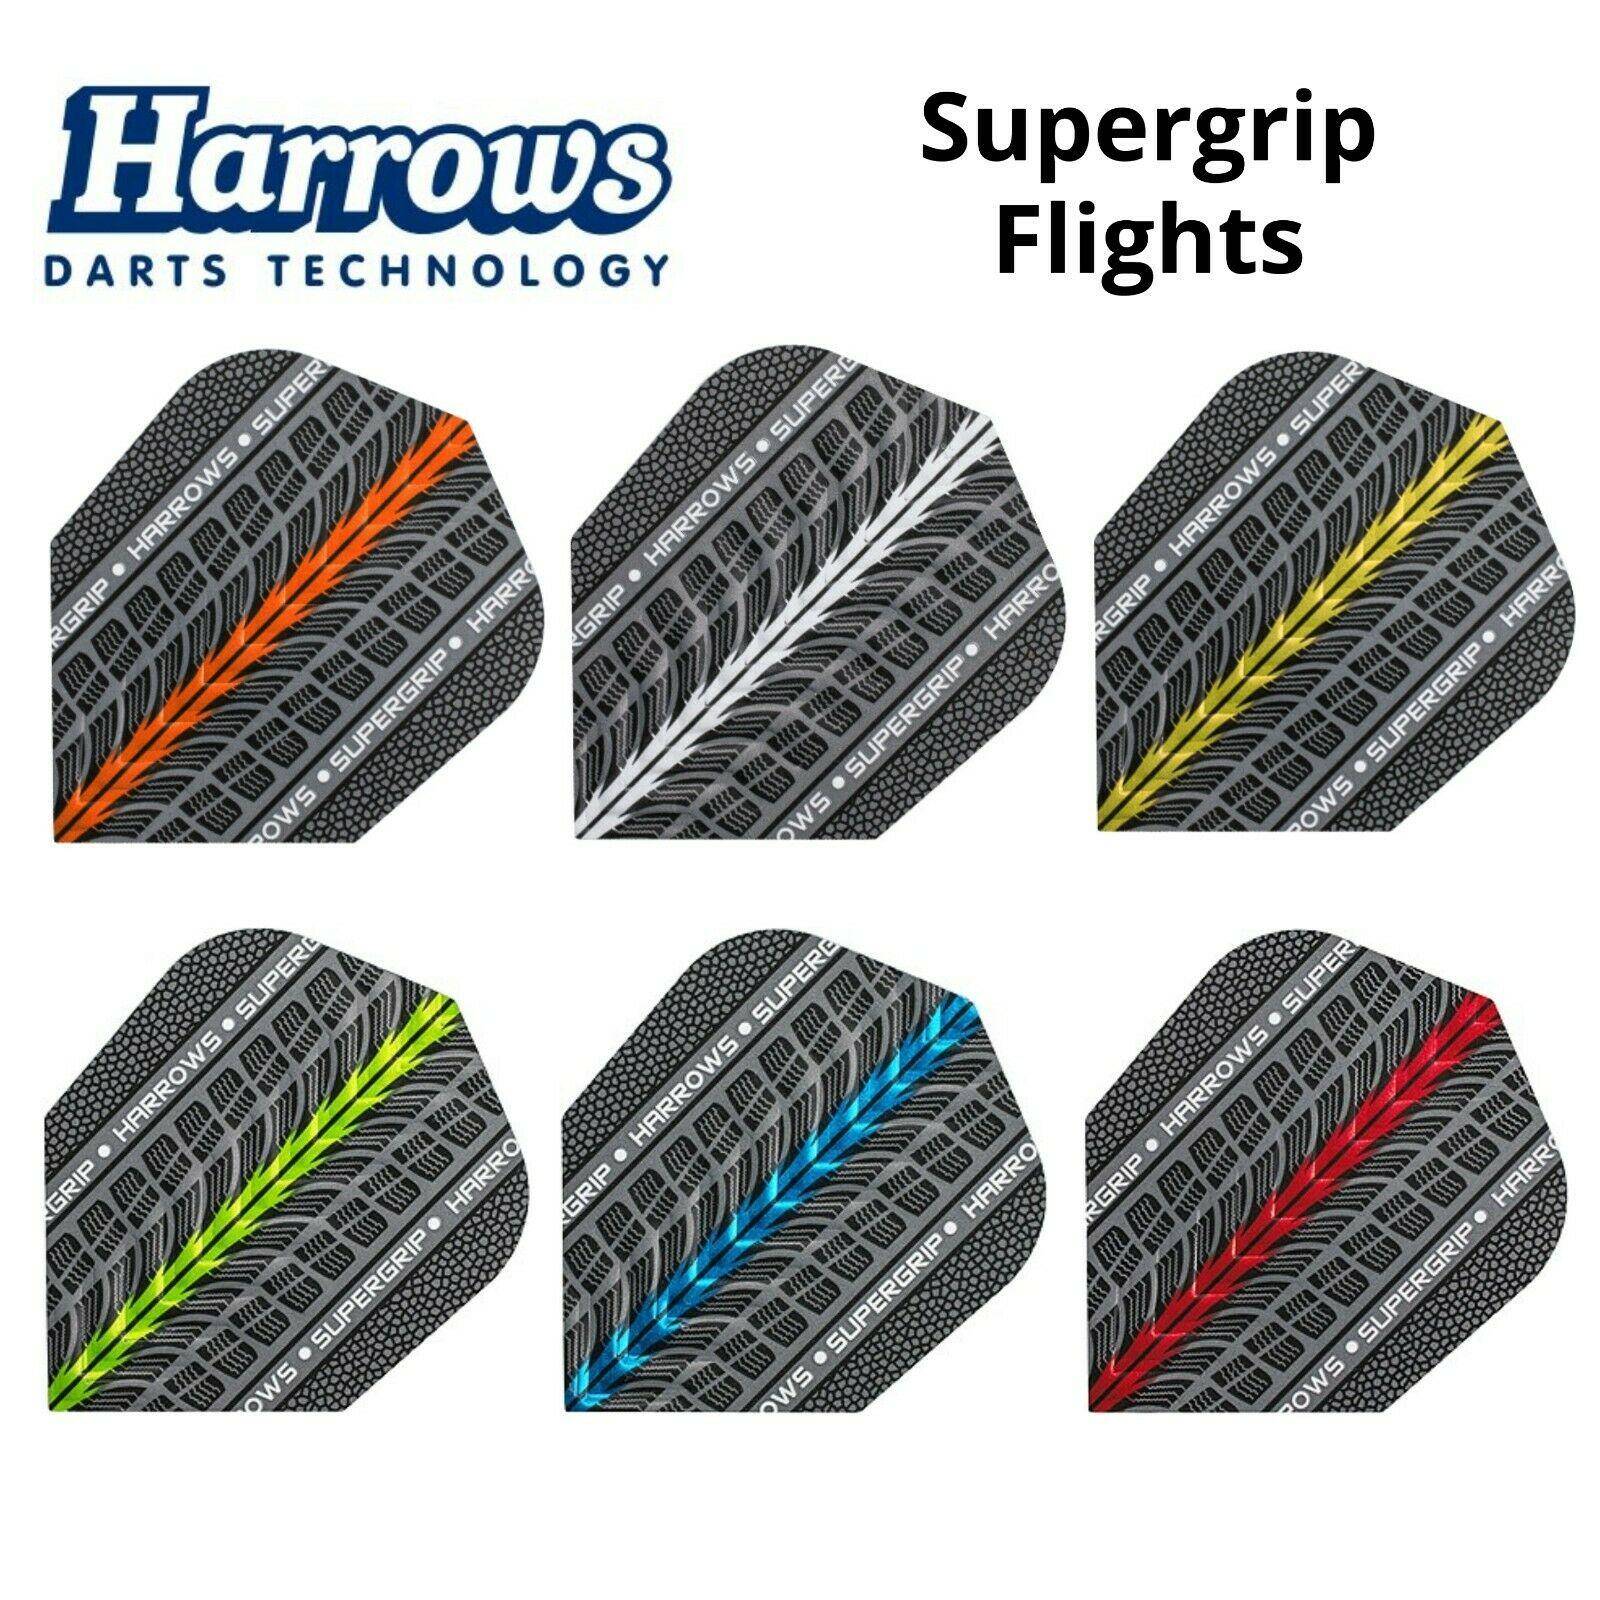 Harrow's Supergrip Flights